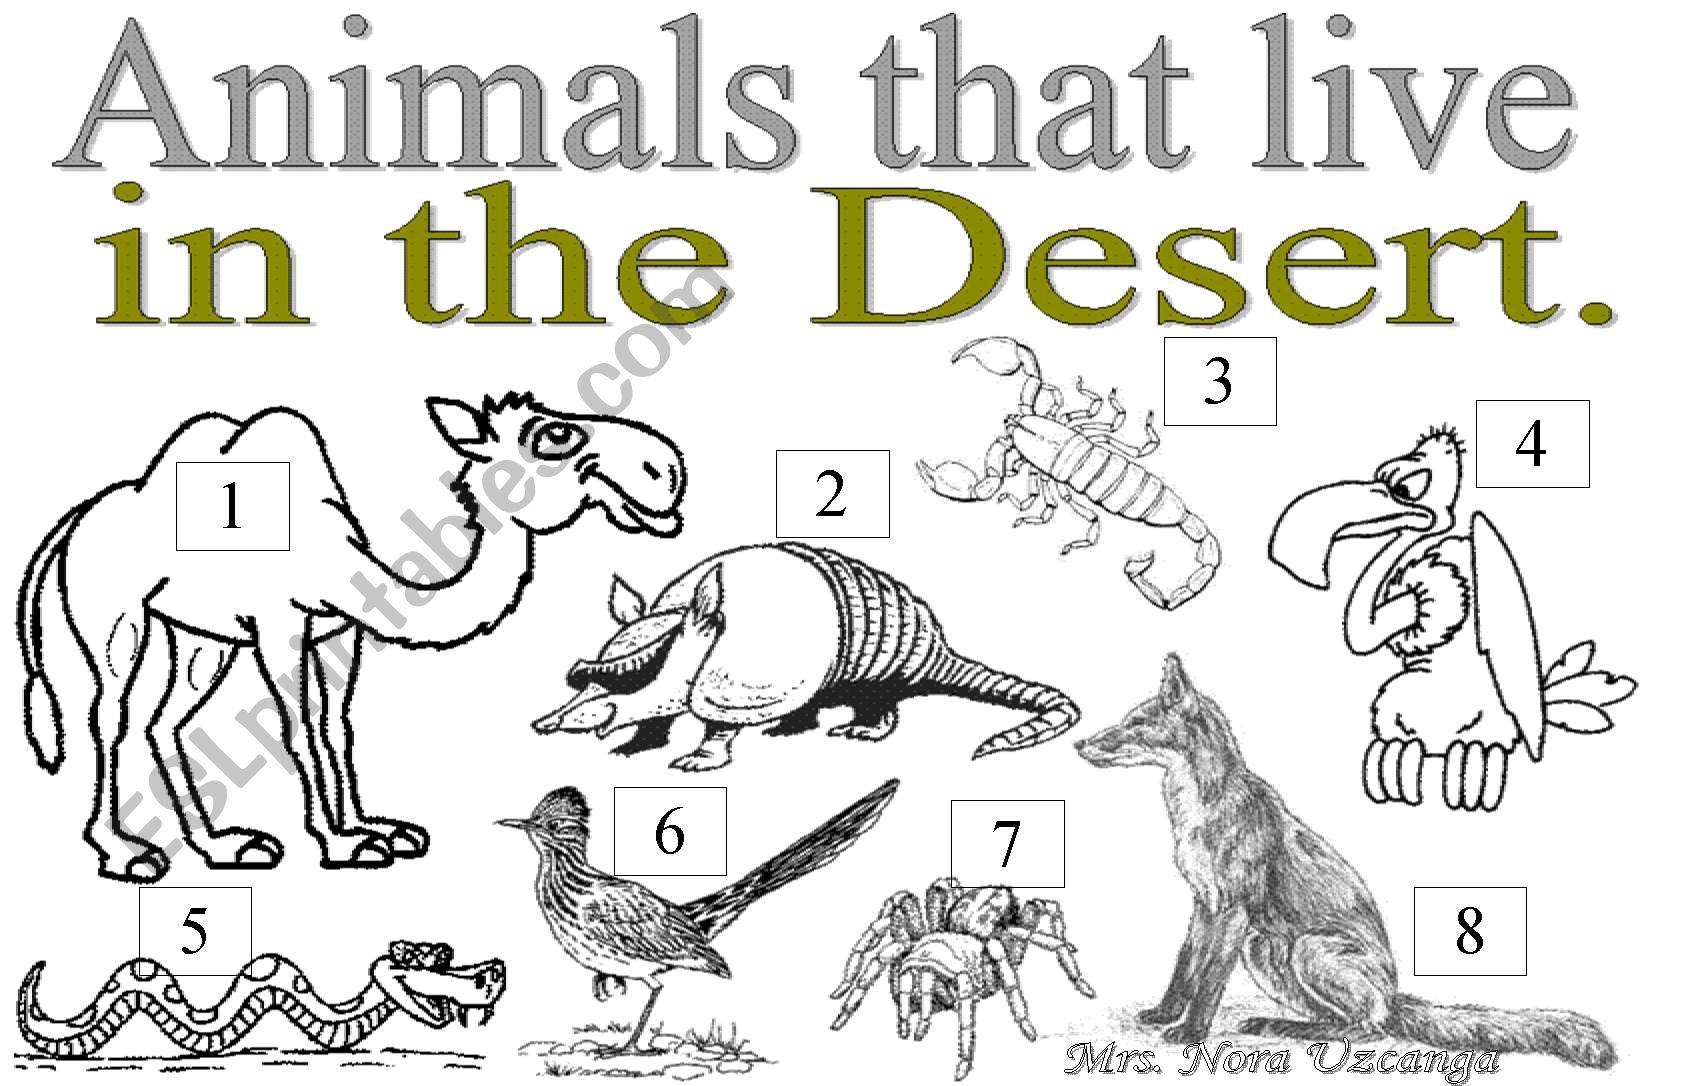 ANIMALS YHAT LIVE IN THE DESERT